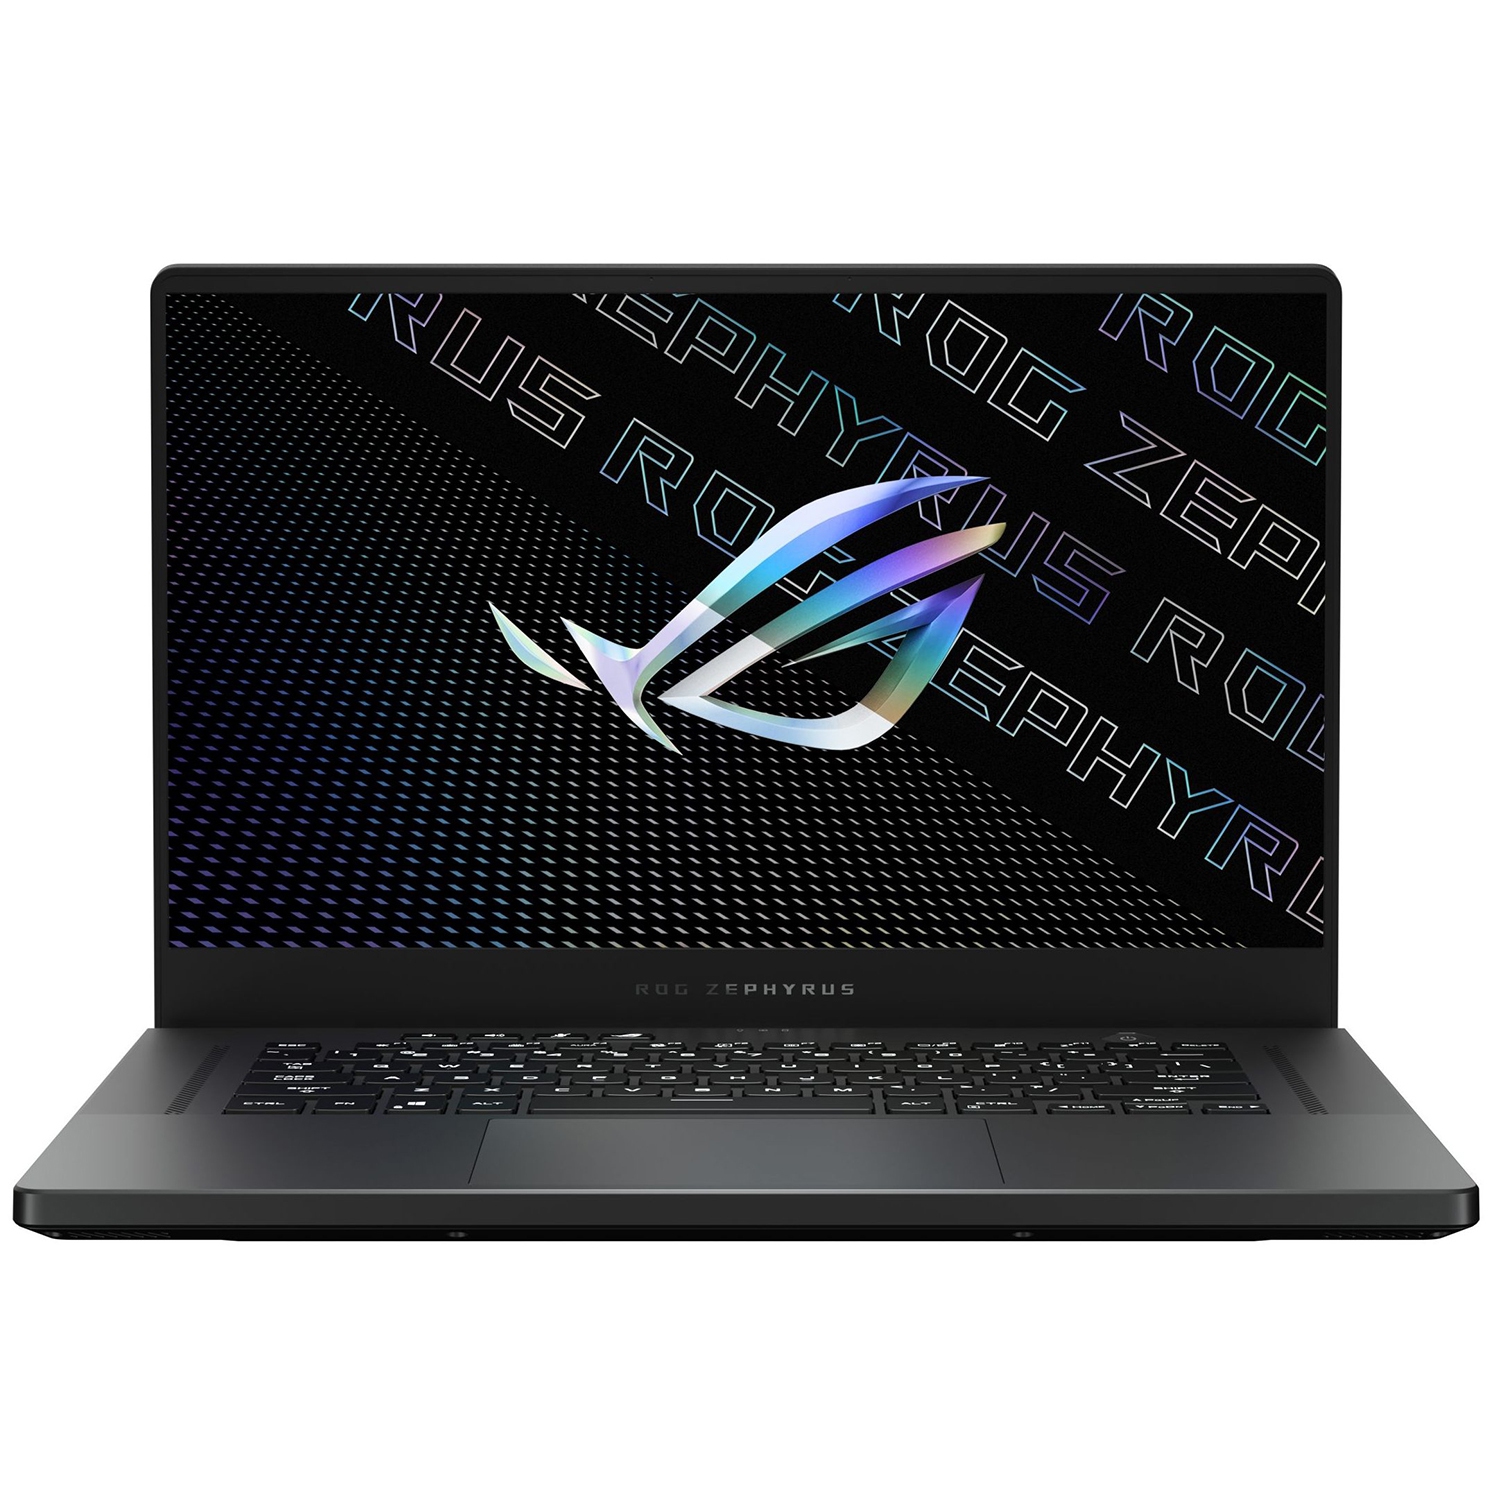 Custom ASUS ROG Zephyrus G15 Laptop (AMD Ryzen 9 5900HS, 24GB RAM, 512GB PCIe SSD, NVIDIA RTX 3060, Win 10 Pro)